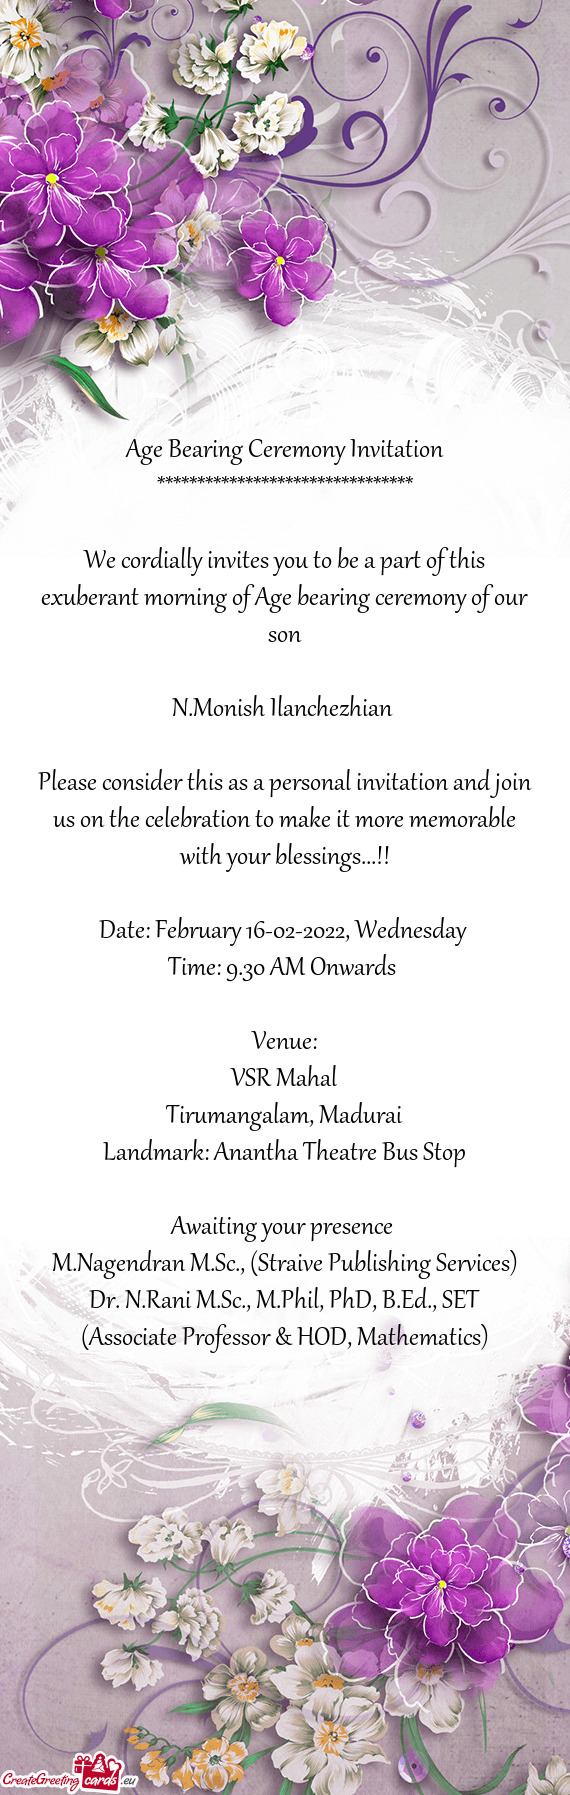 Age Bearing Ceremony Invitation